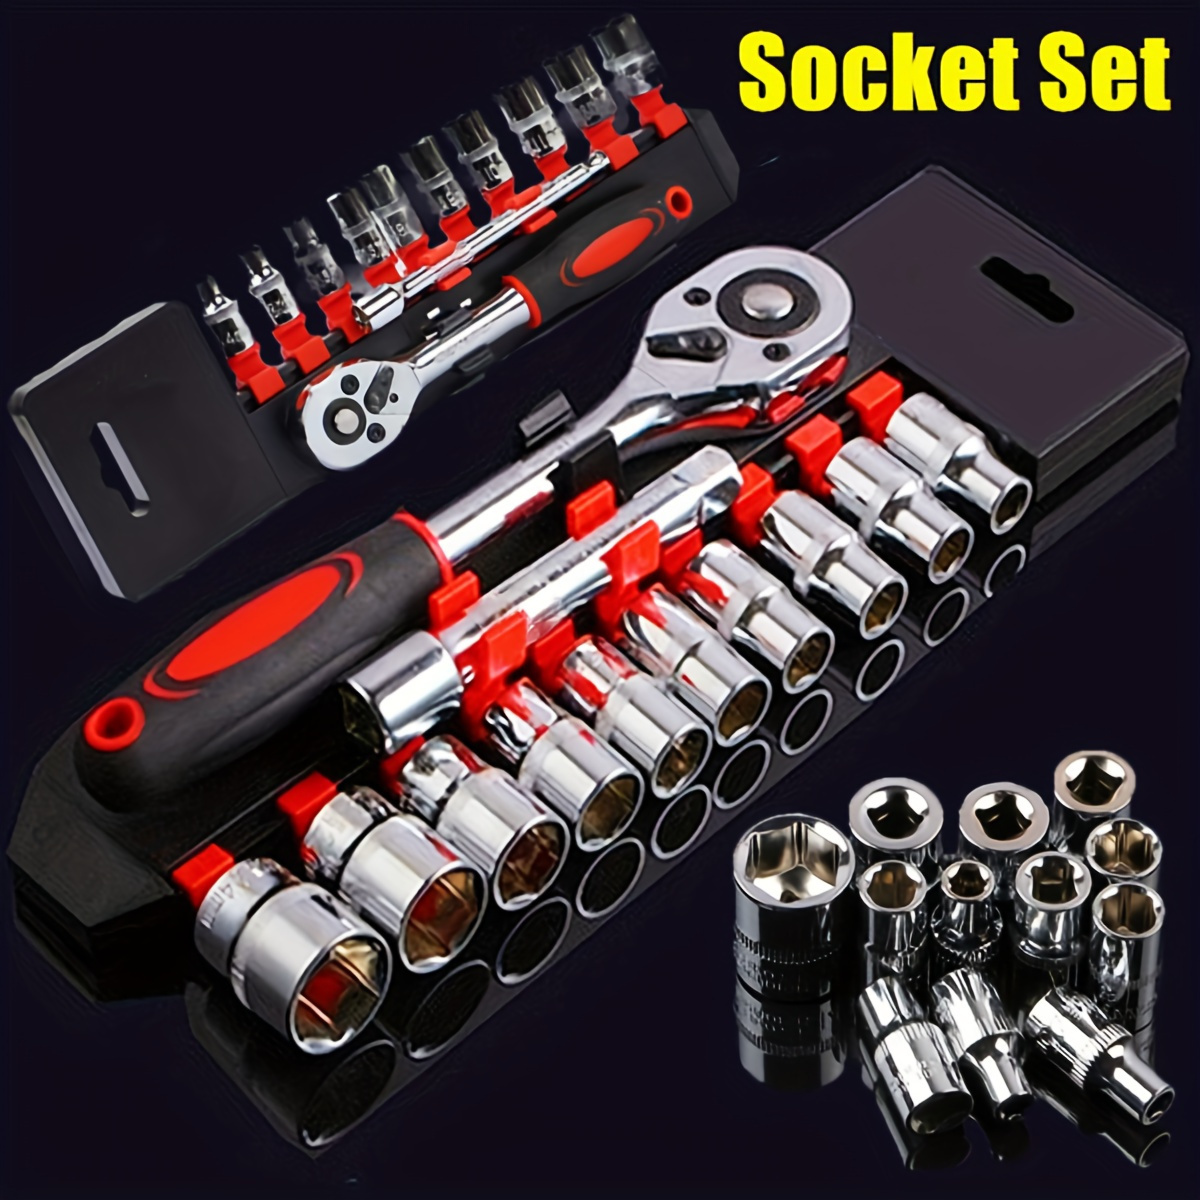 

versatile" Upgraded 1/4" Alloy Steel Wrench Socket Set For Car, Boat, Motorcycle, Bicycle Repair - Industrial Tool Kit, 1 Set